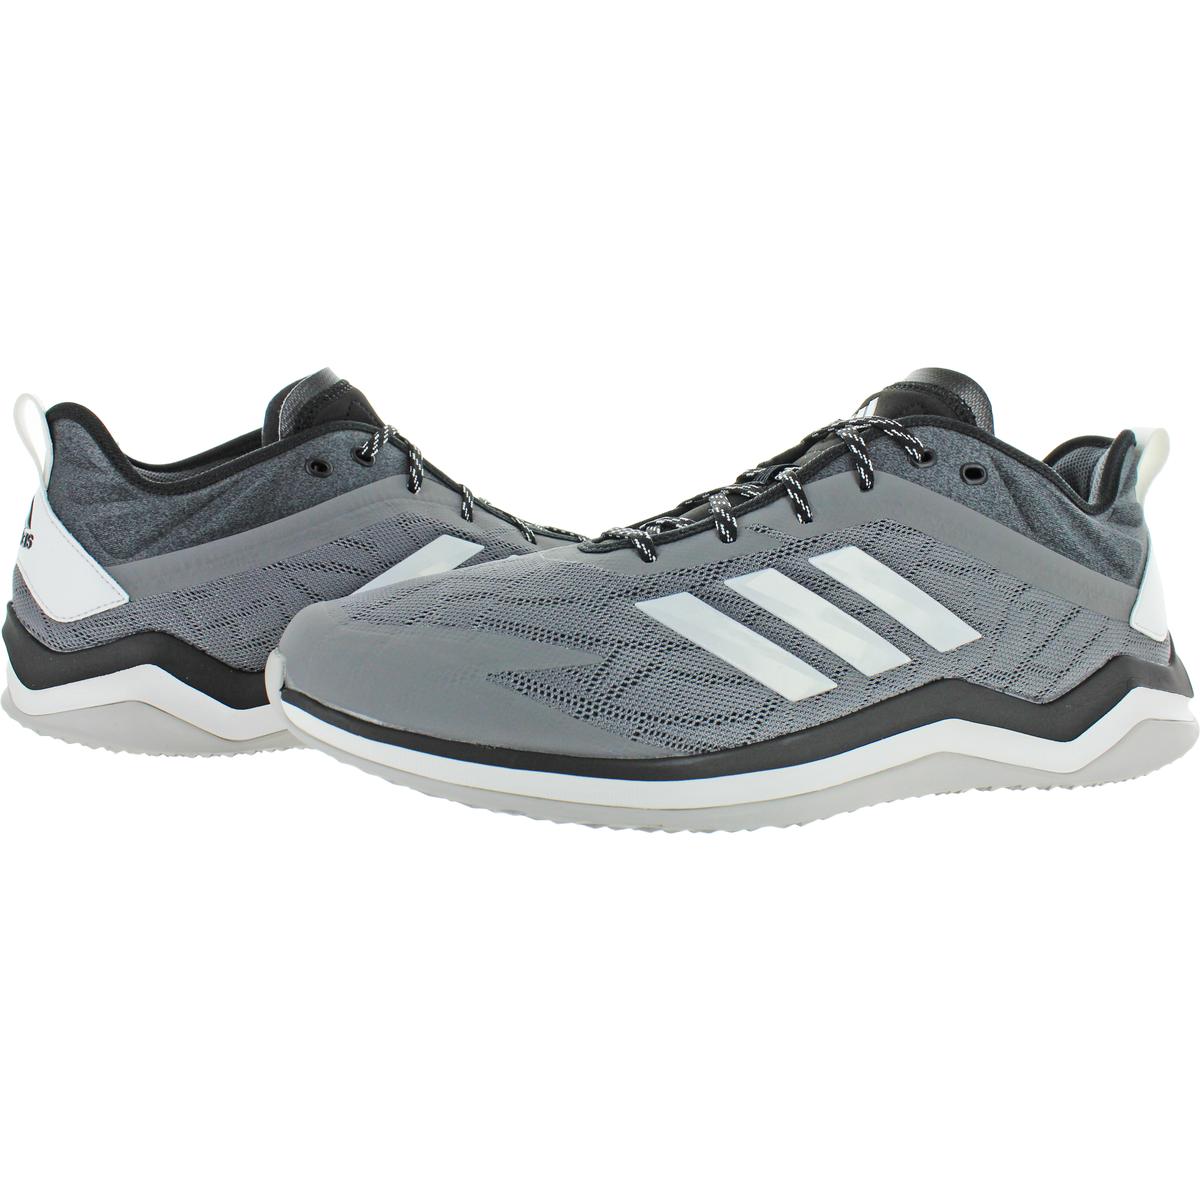 Adidas Mens Speed Trainer 4 Gray Baseball Sneakers Shoes 14 Medium (D ...